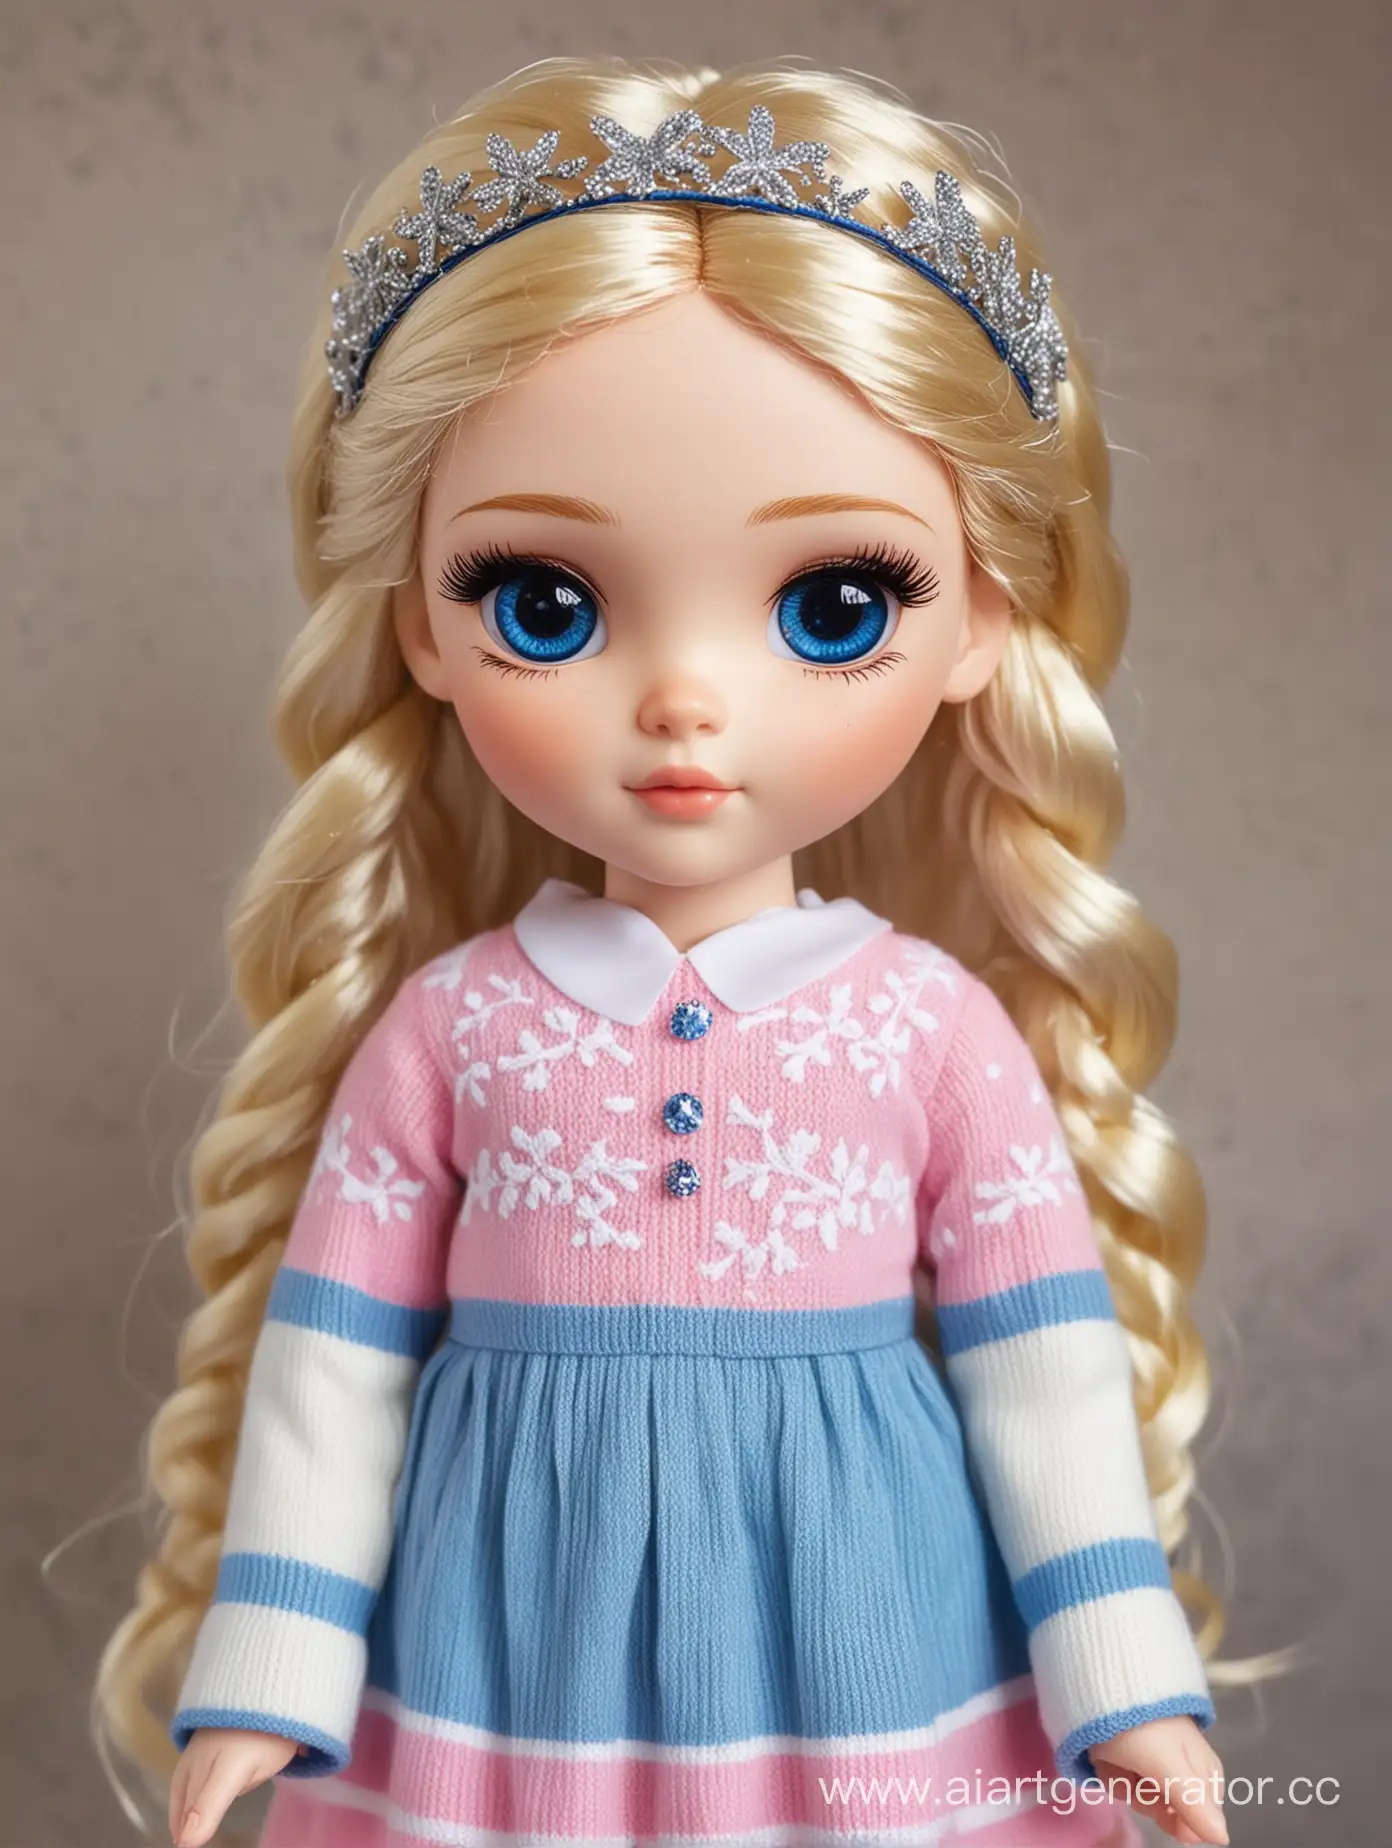 Elegant-Princess-Doll-with-Blue-Eyes-and-Snowflake-Dress